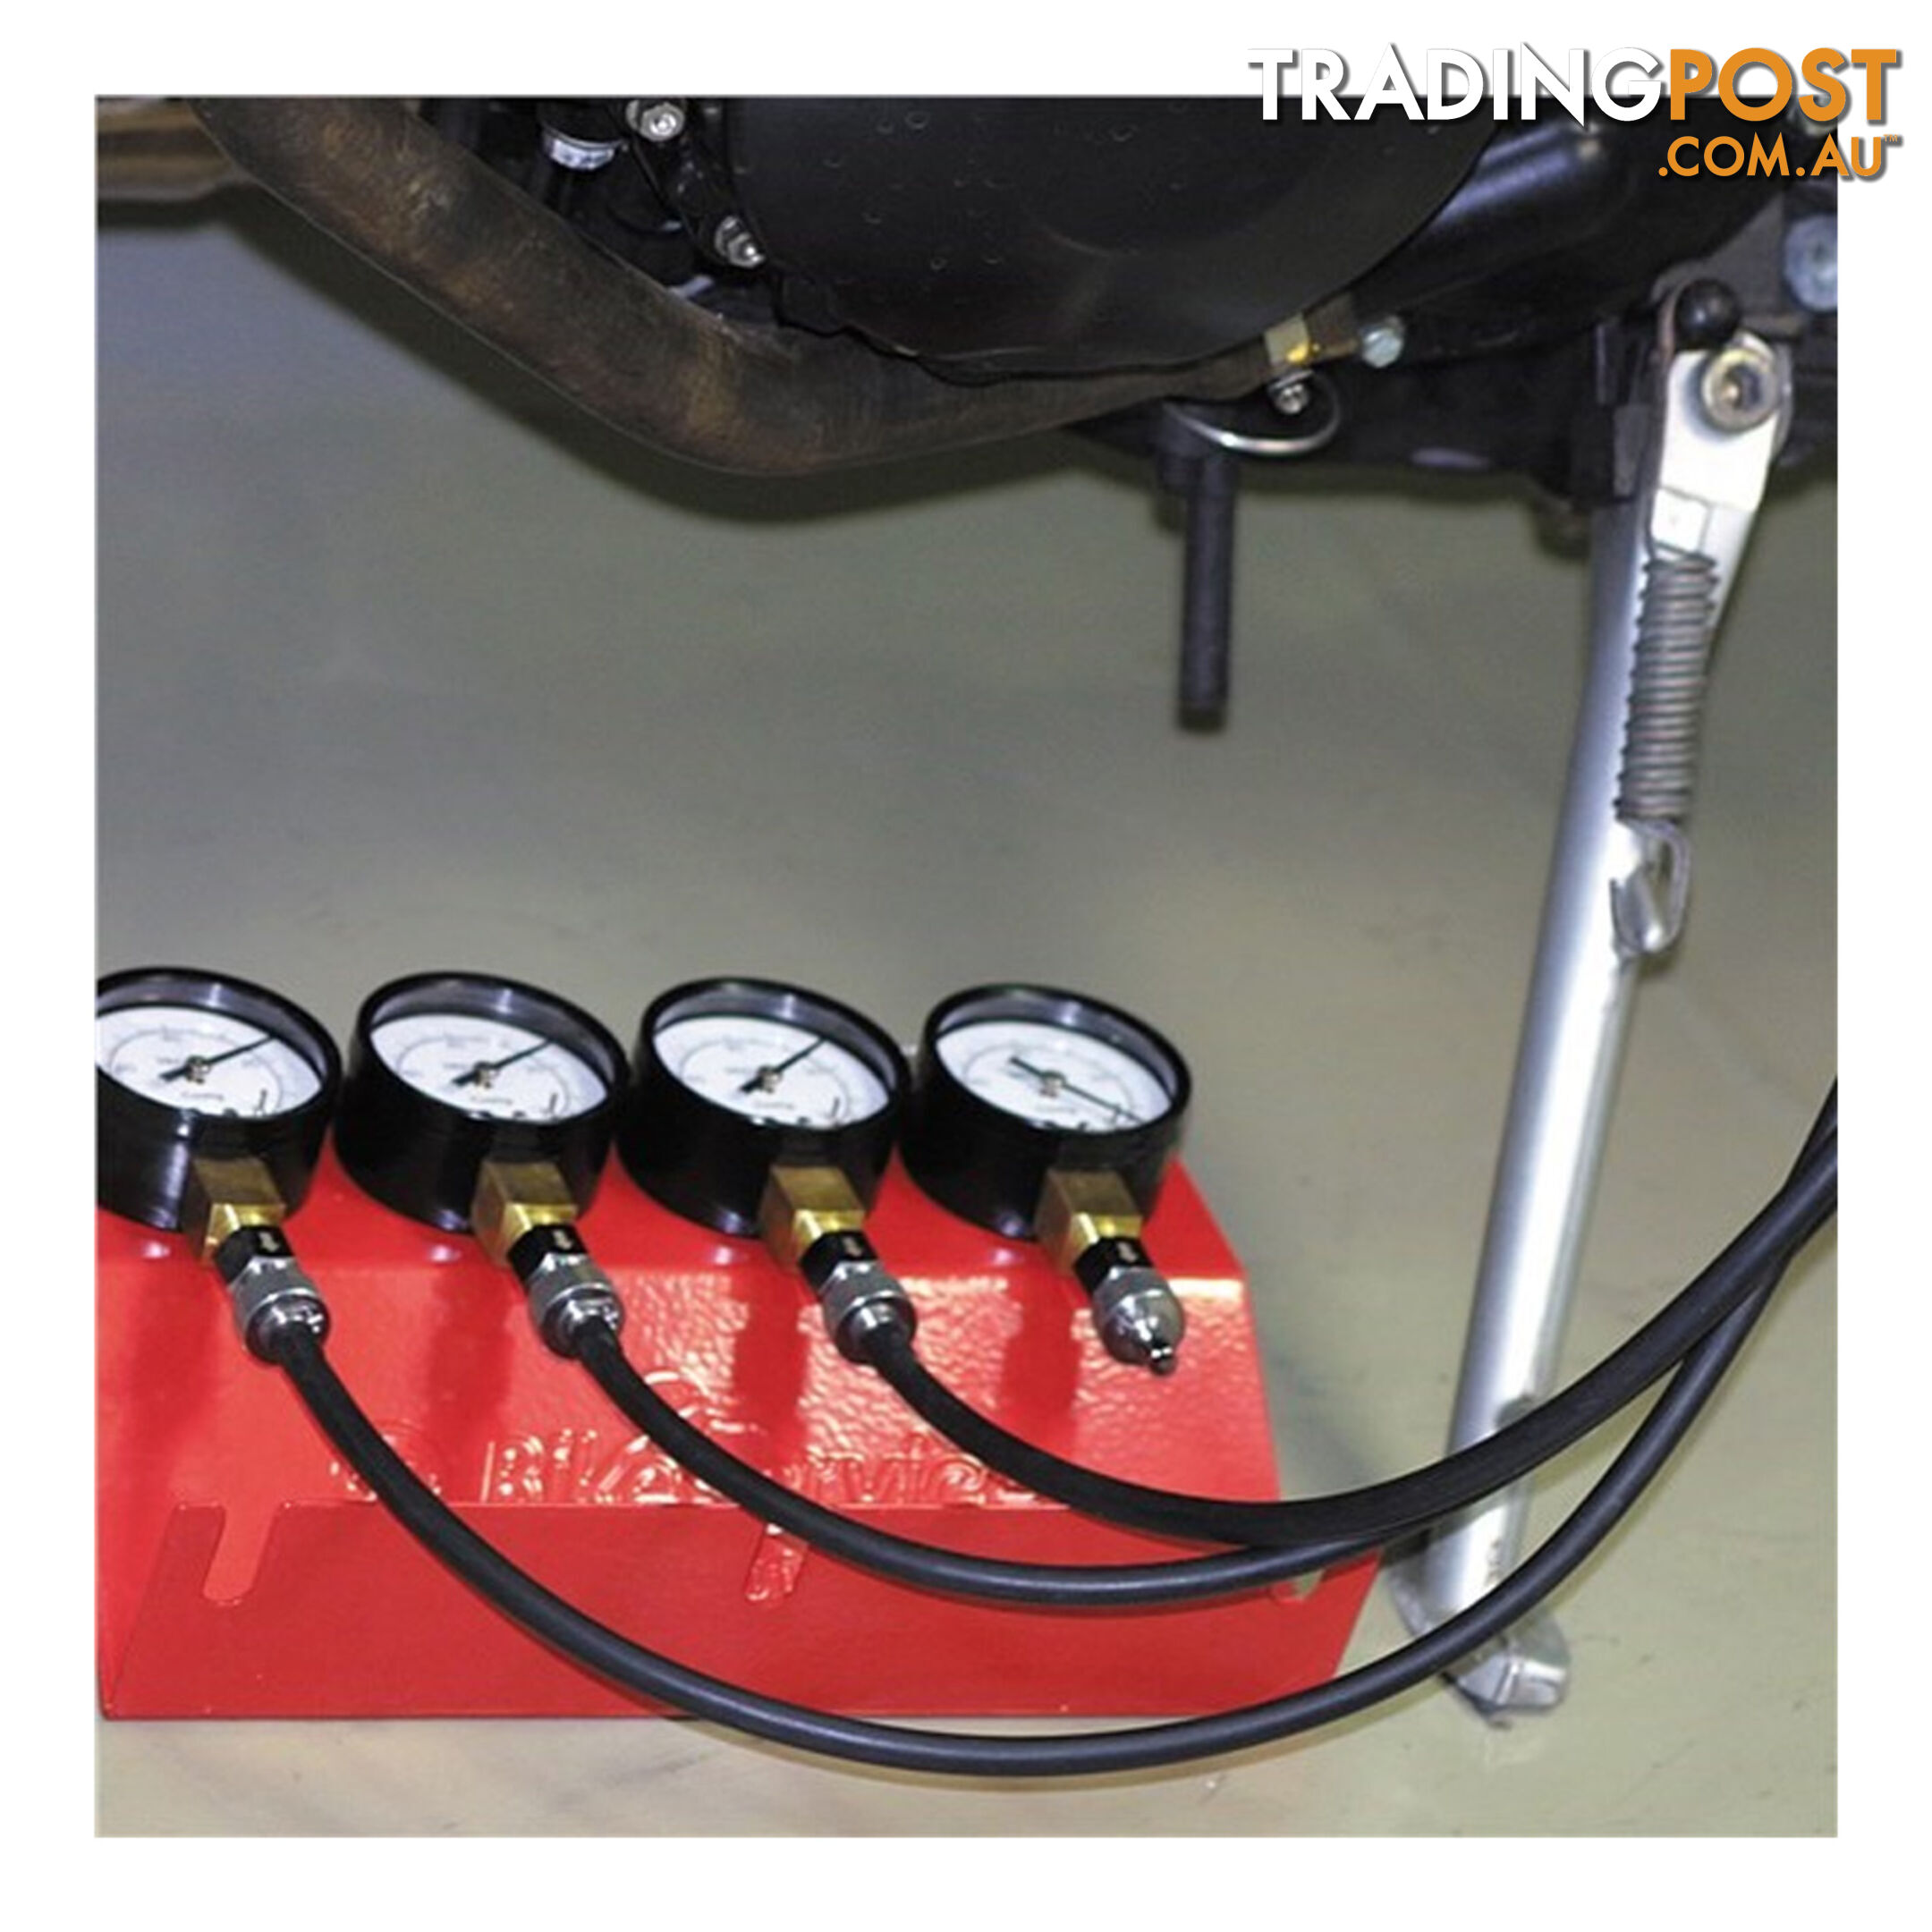 Bike Service Carburetor Synchroniser Vacuum Gauge Set SKU - BS8117